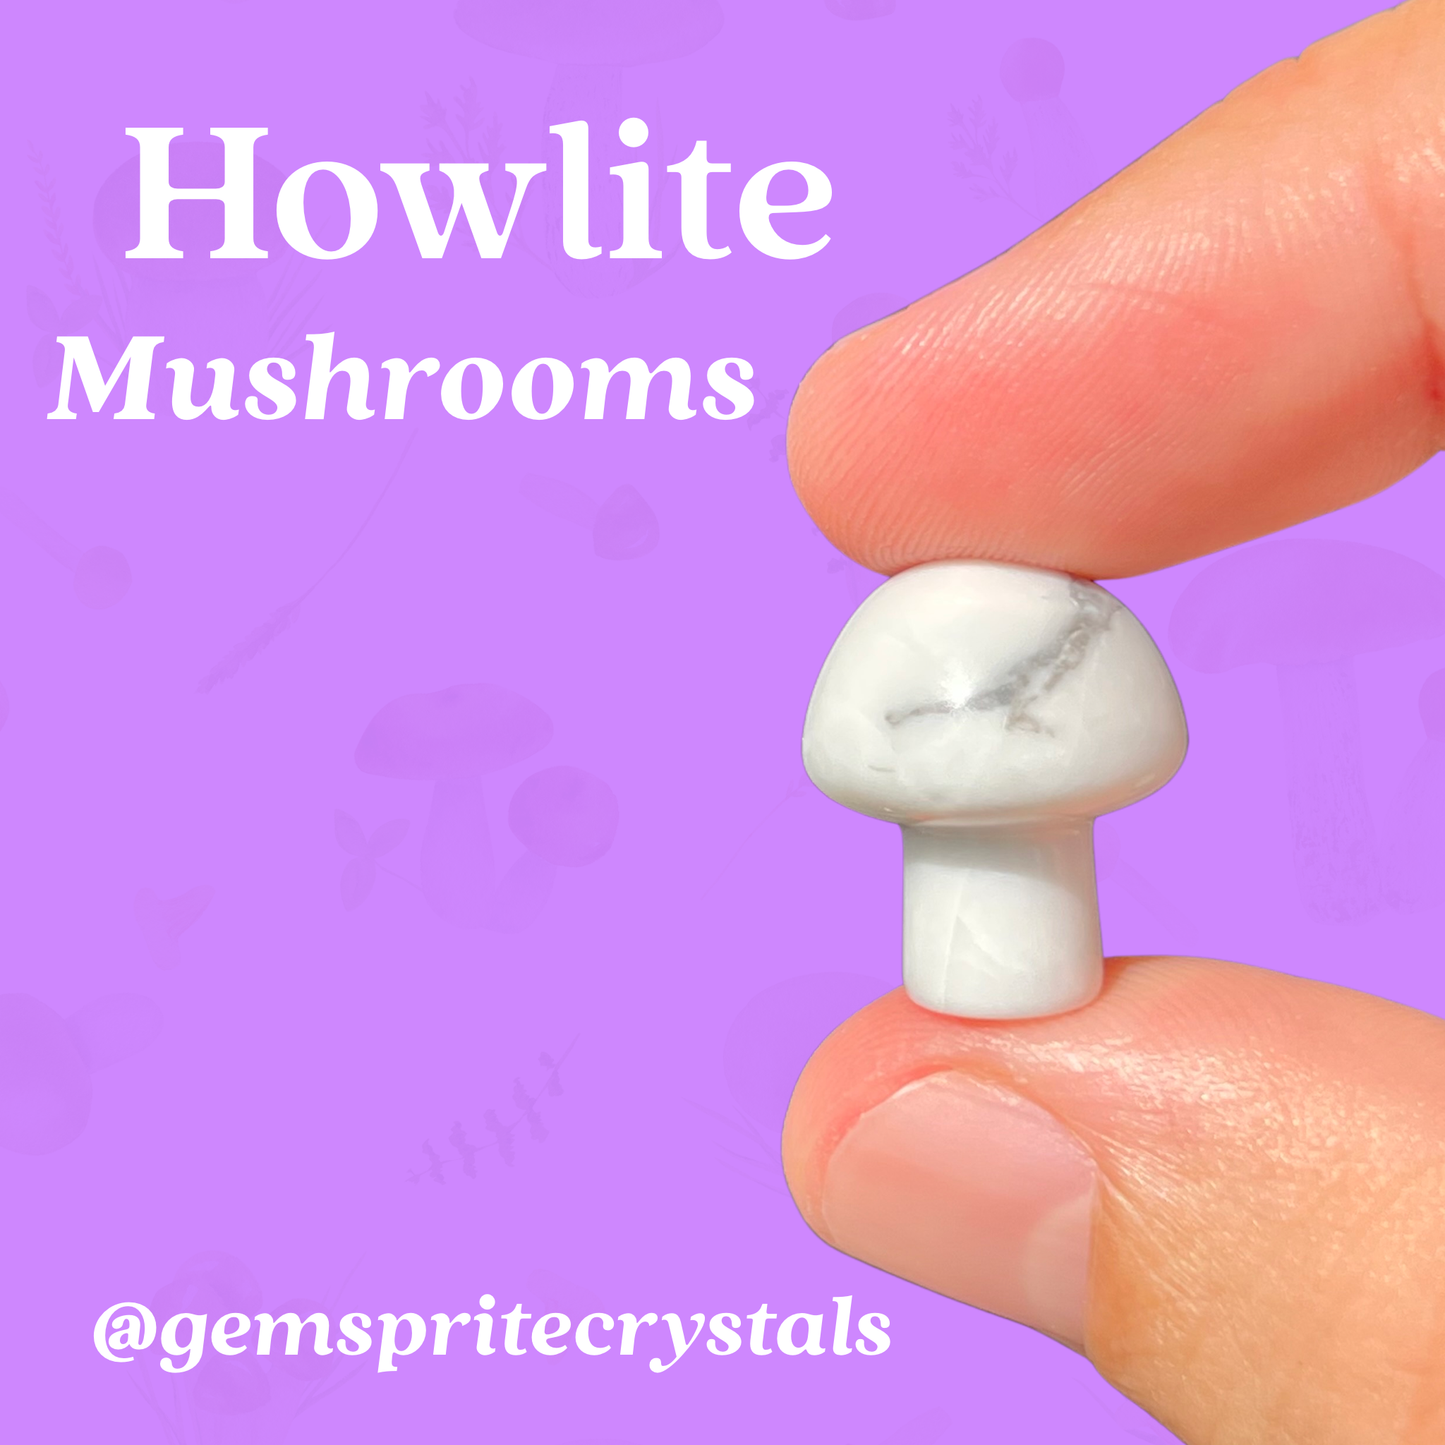 Howlite Mushrooms